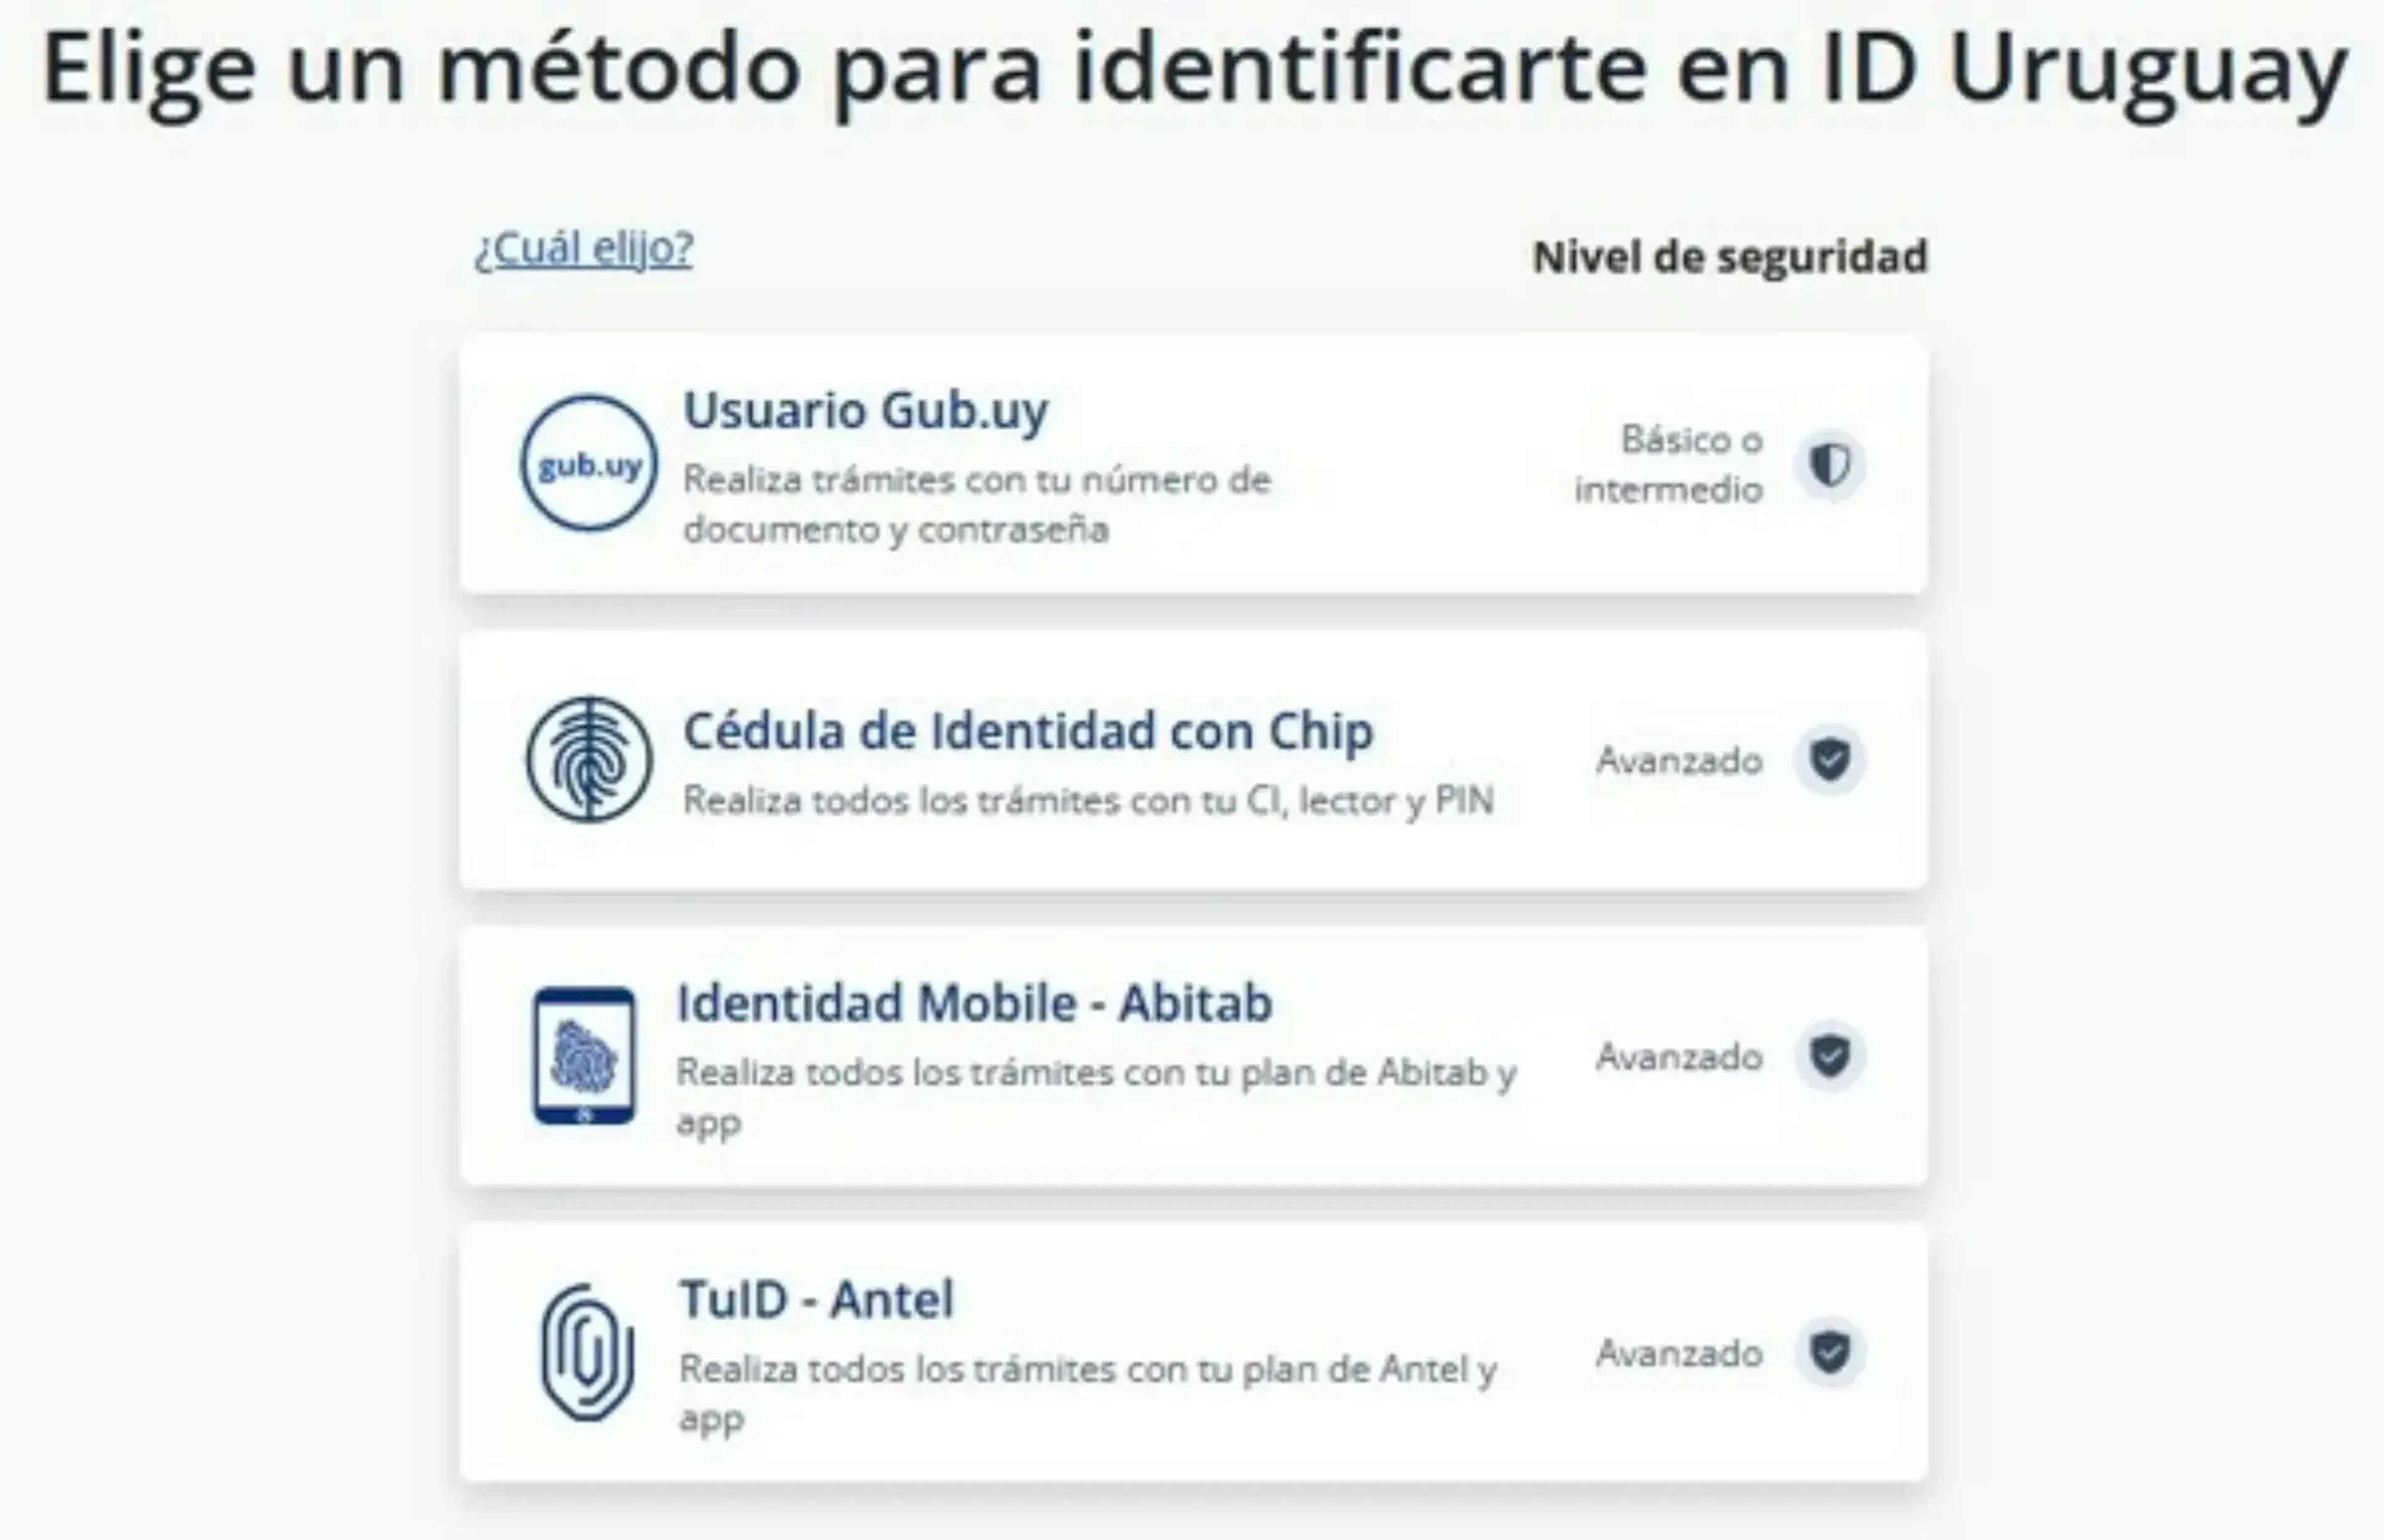 A screengrab of the ID Uruguay platform